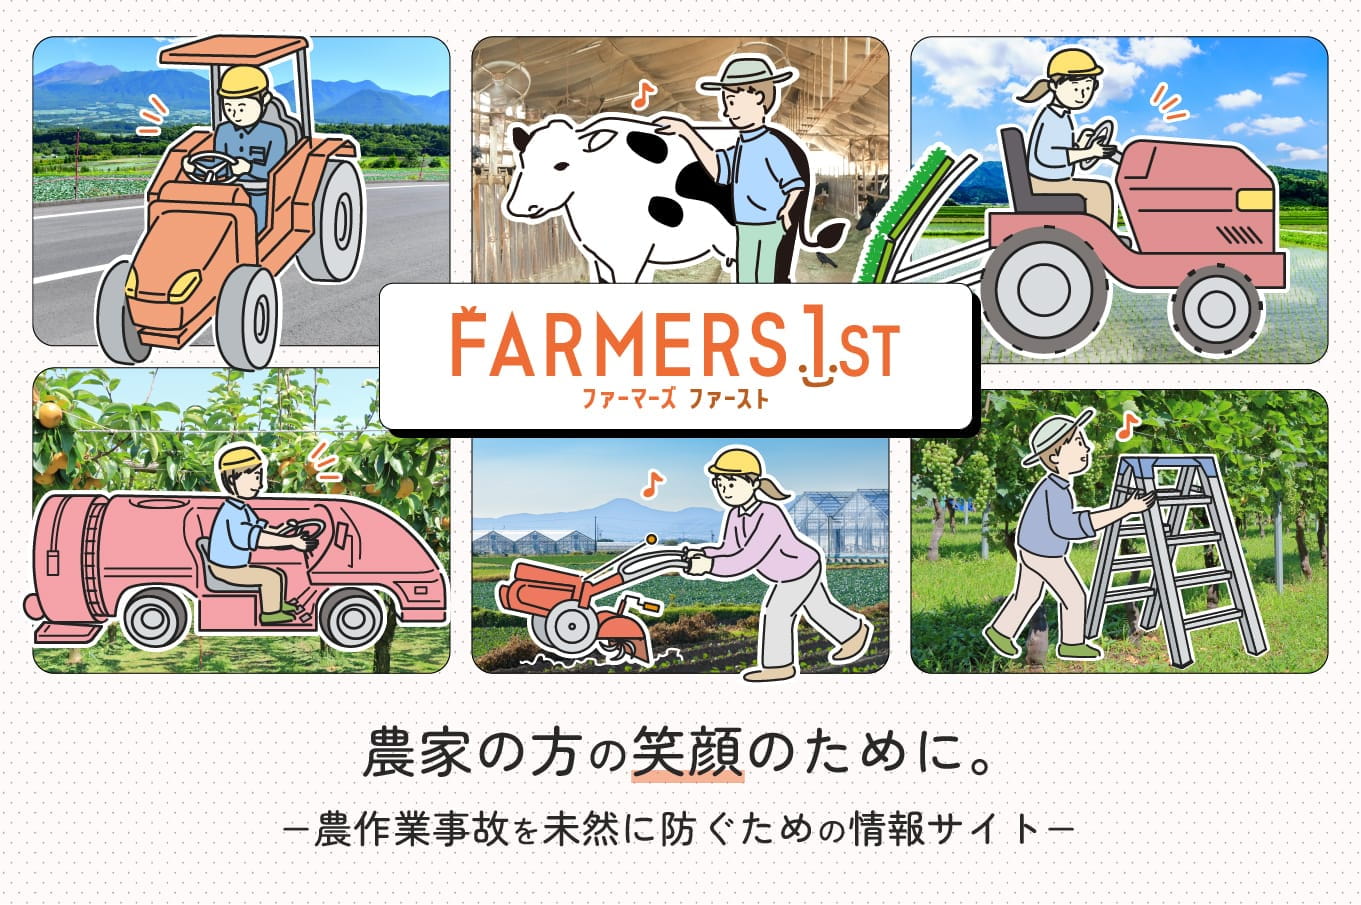 FARMERS 1ST イメージ写真